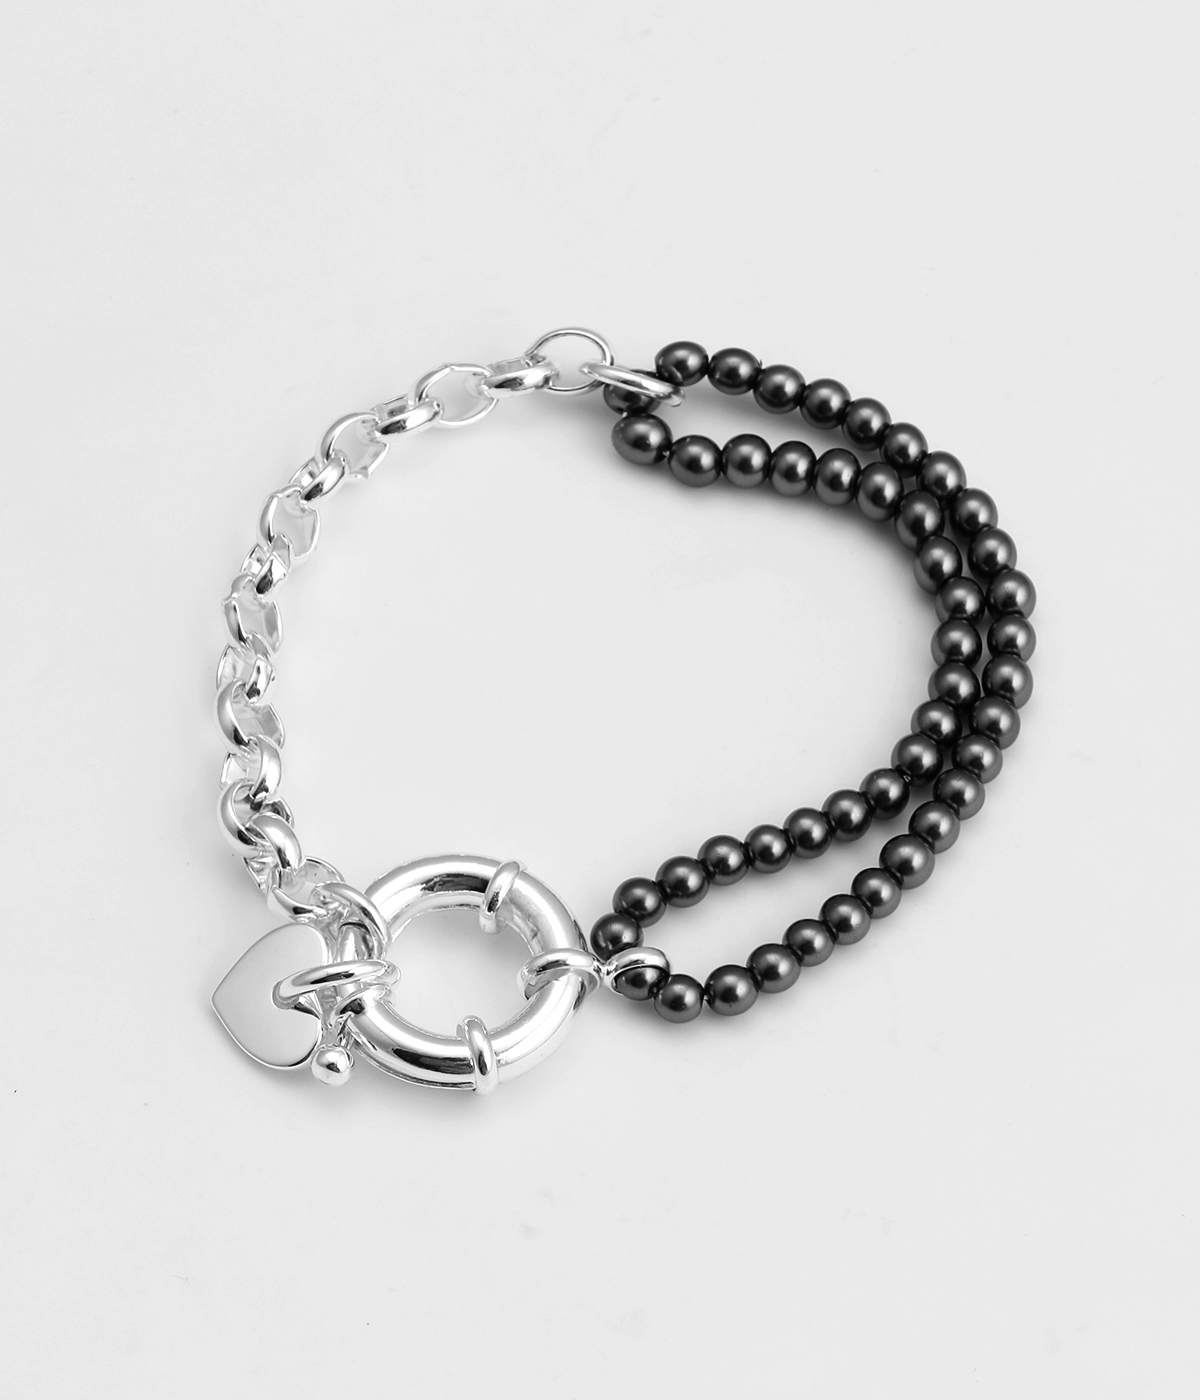 Pearls and Heart Bracelet -latest BRACELET,Chain design 2021